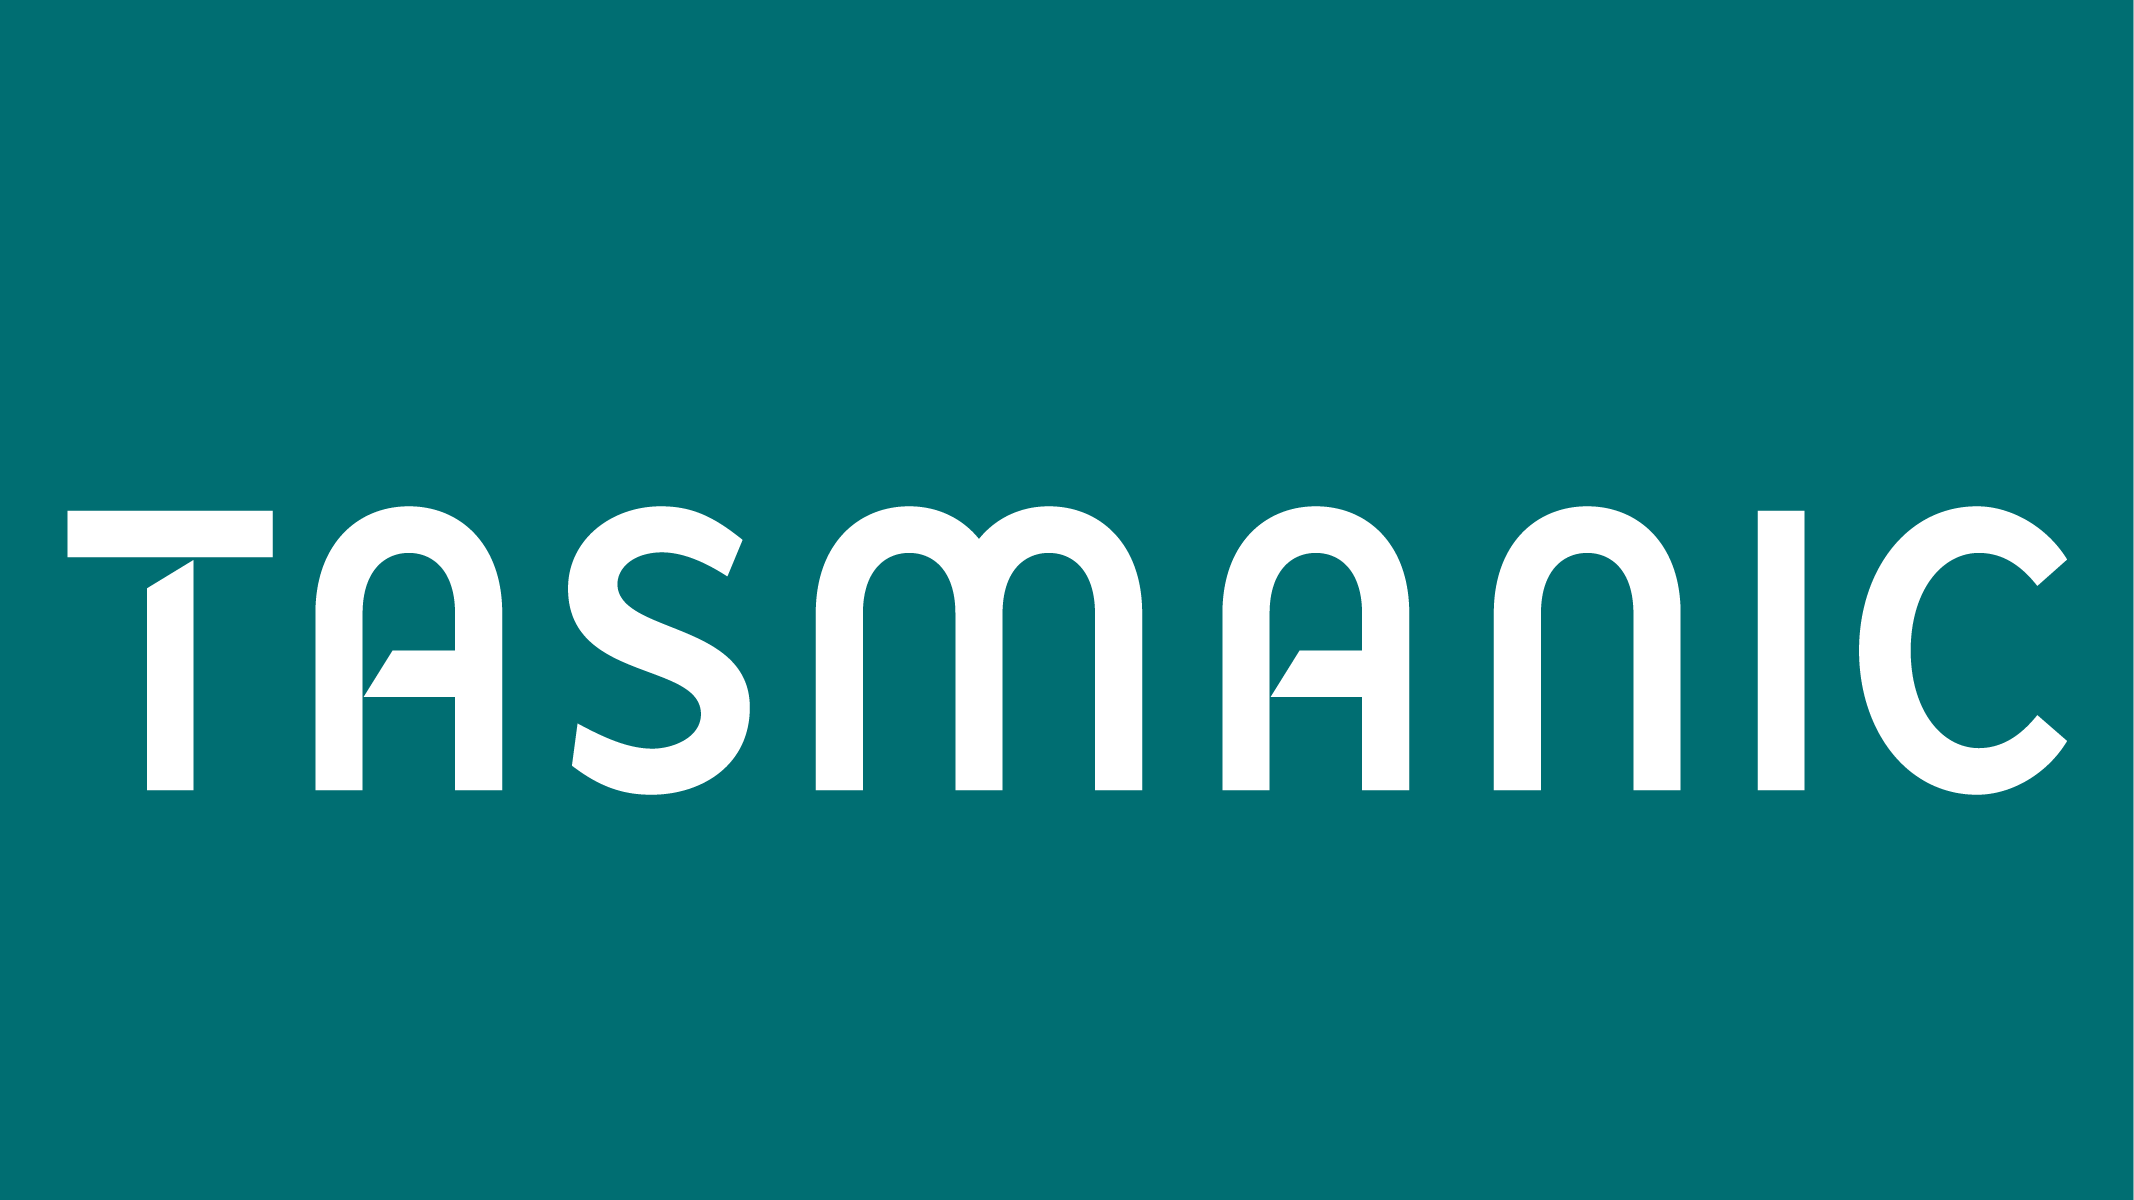 Tasmaniens logotyp